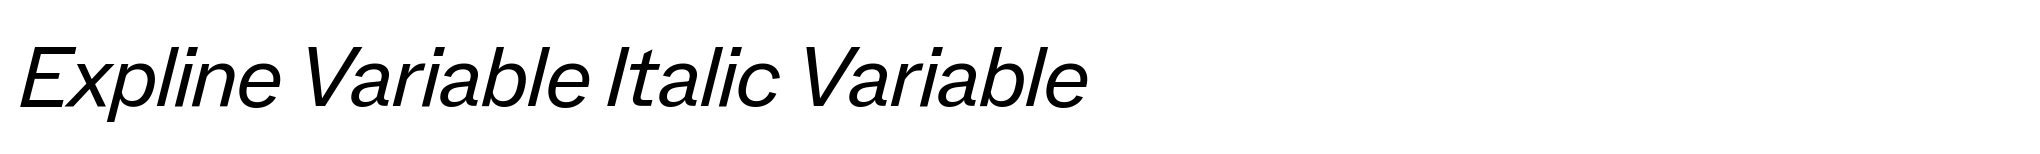 Expline Variable Italic Variable image